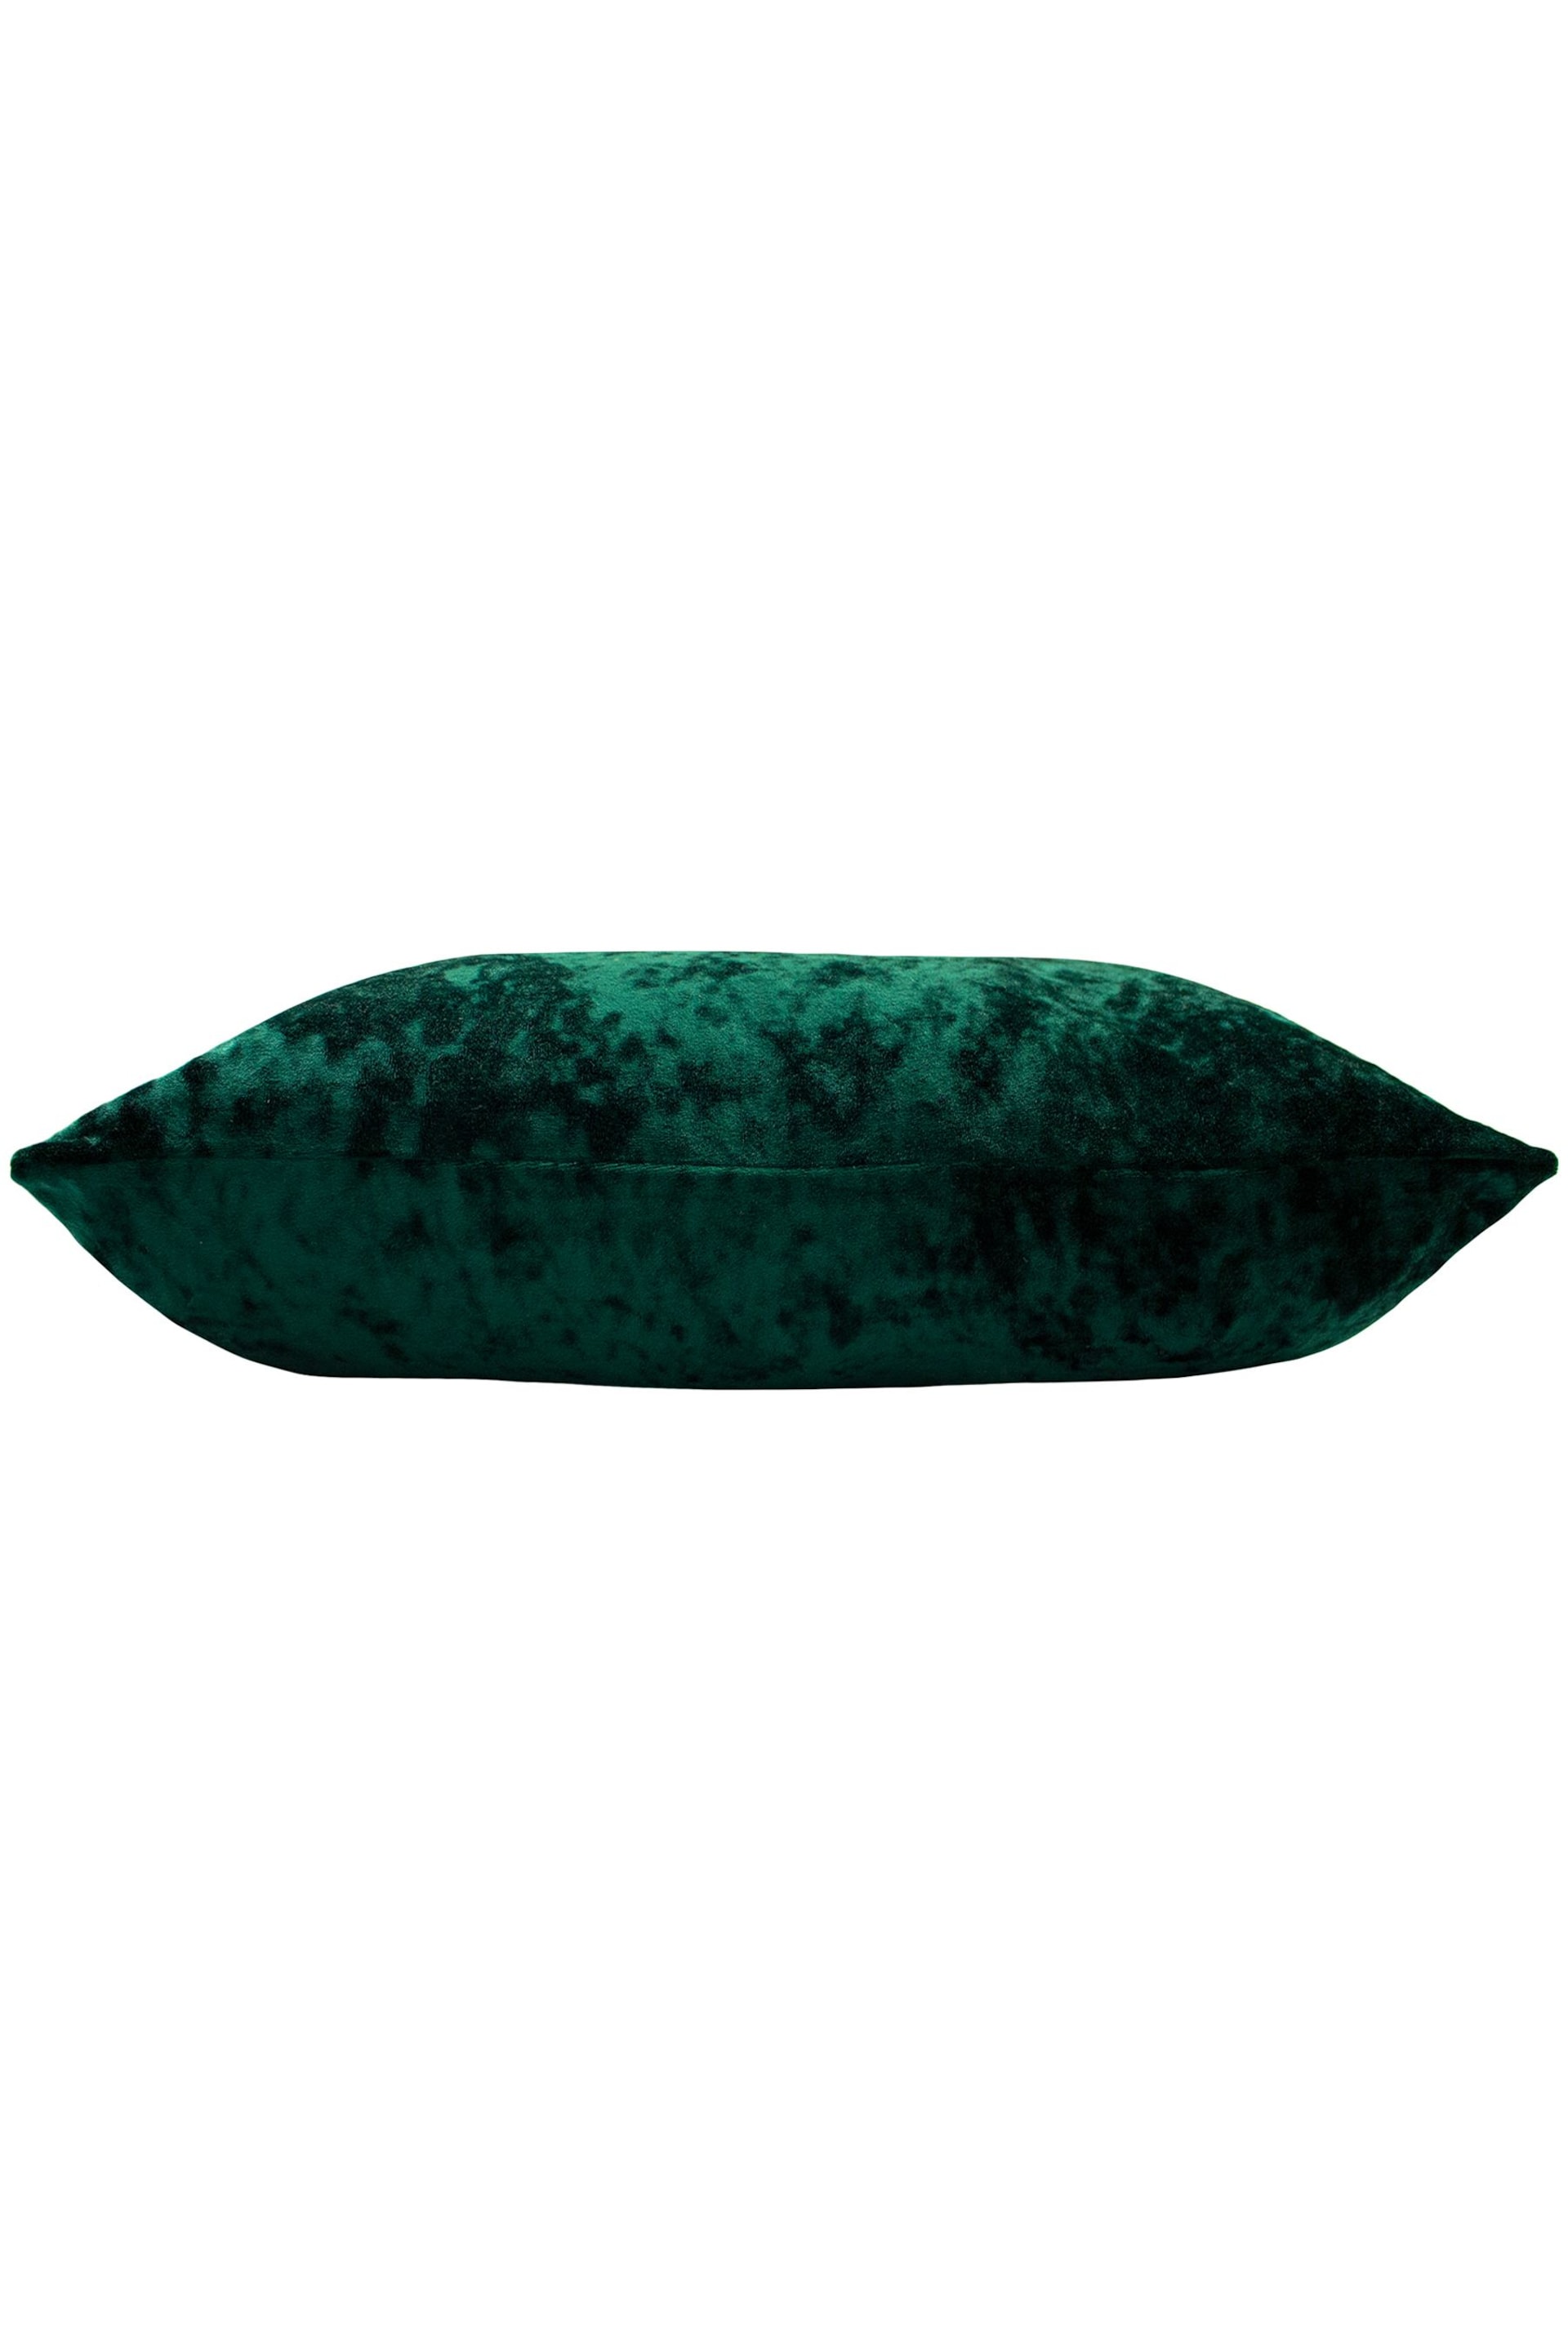 Riva Paoletti Emerald Green Verona Crushed Velvet Rectangular Polyester Filled Cushion - Image 2 of 3